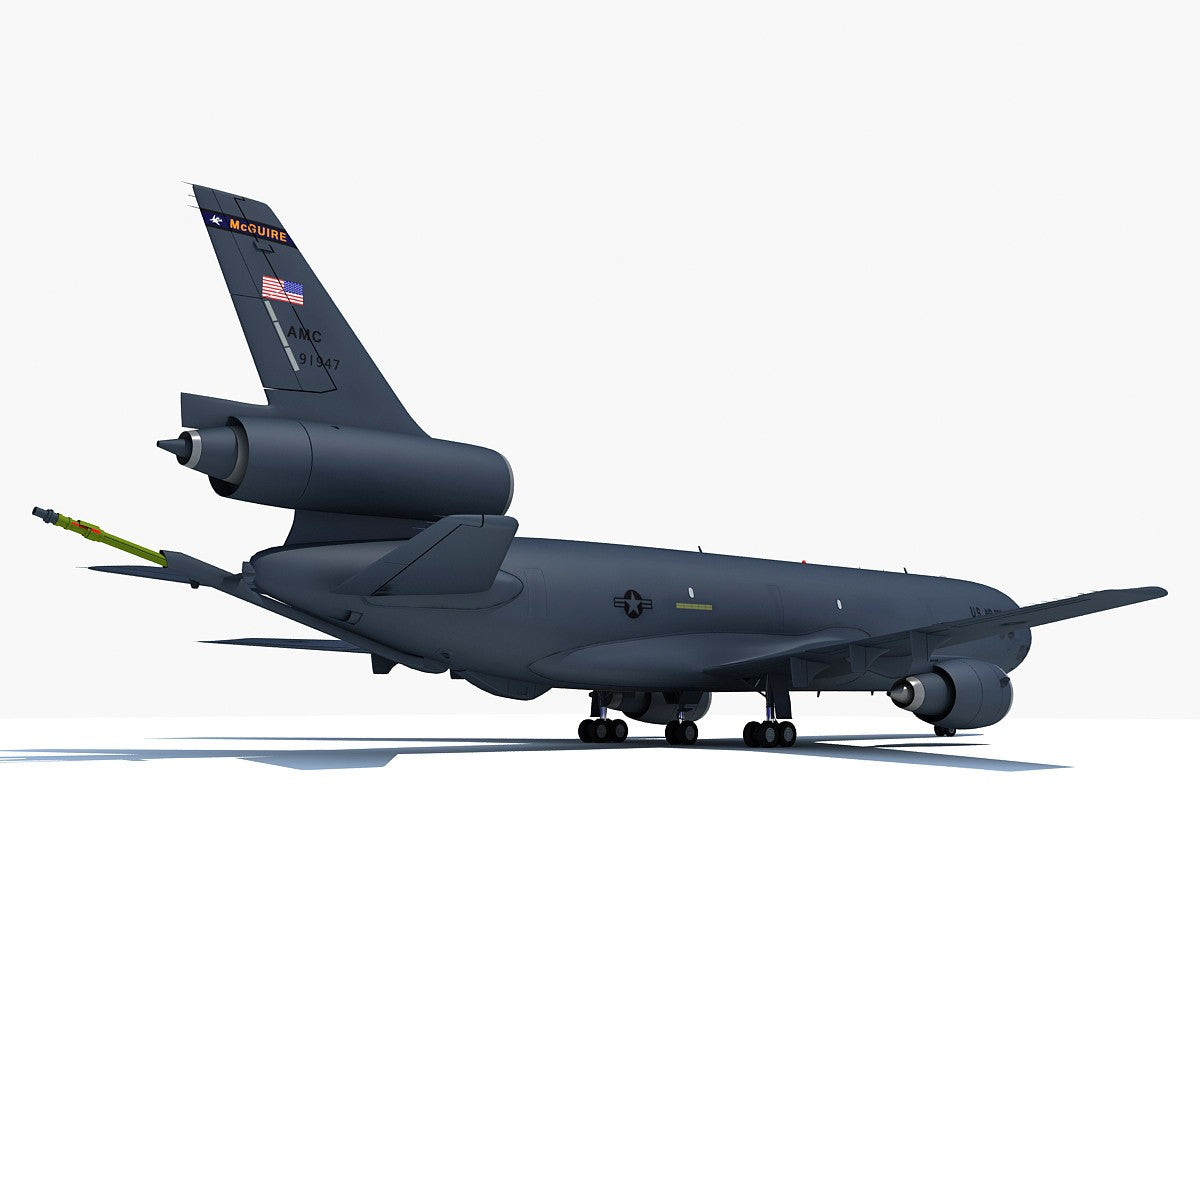 3D Military Aircraft Models